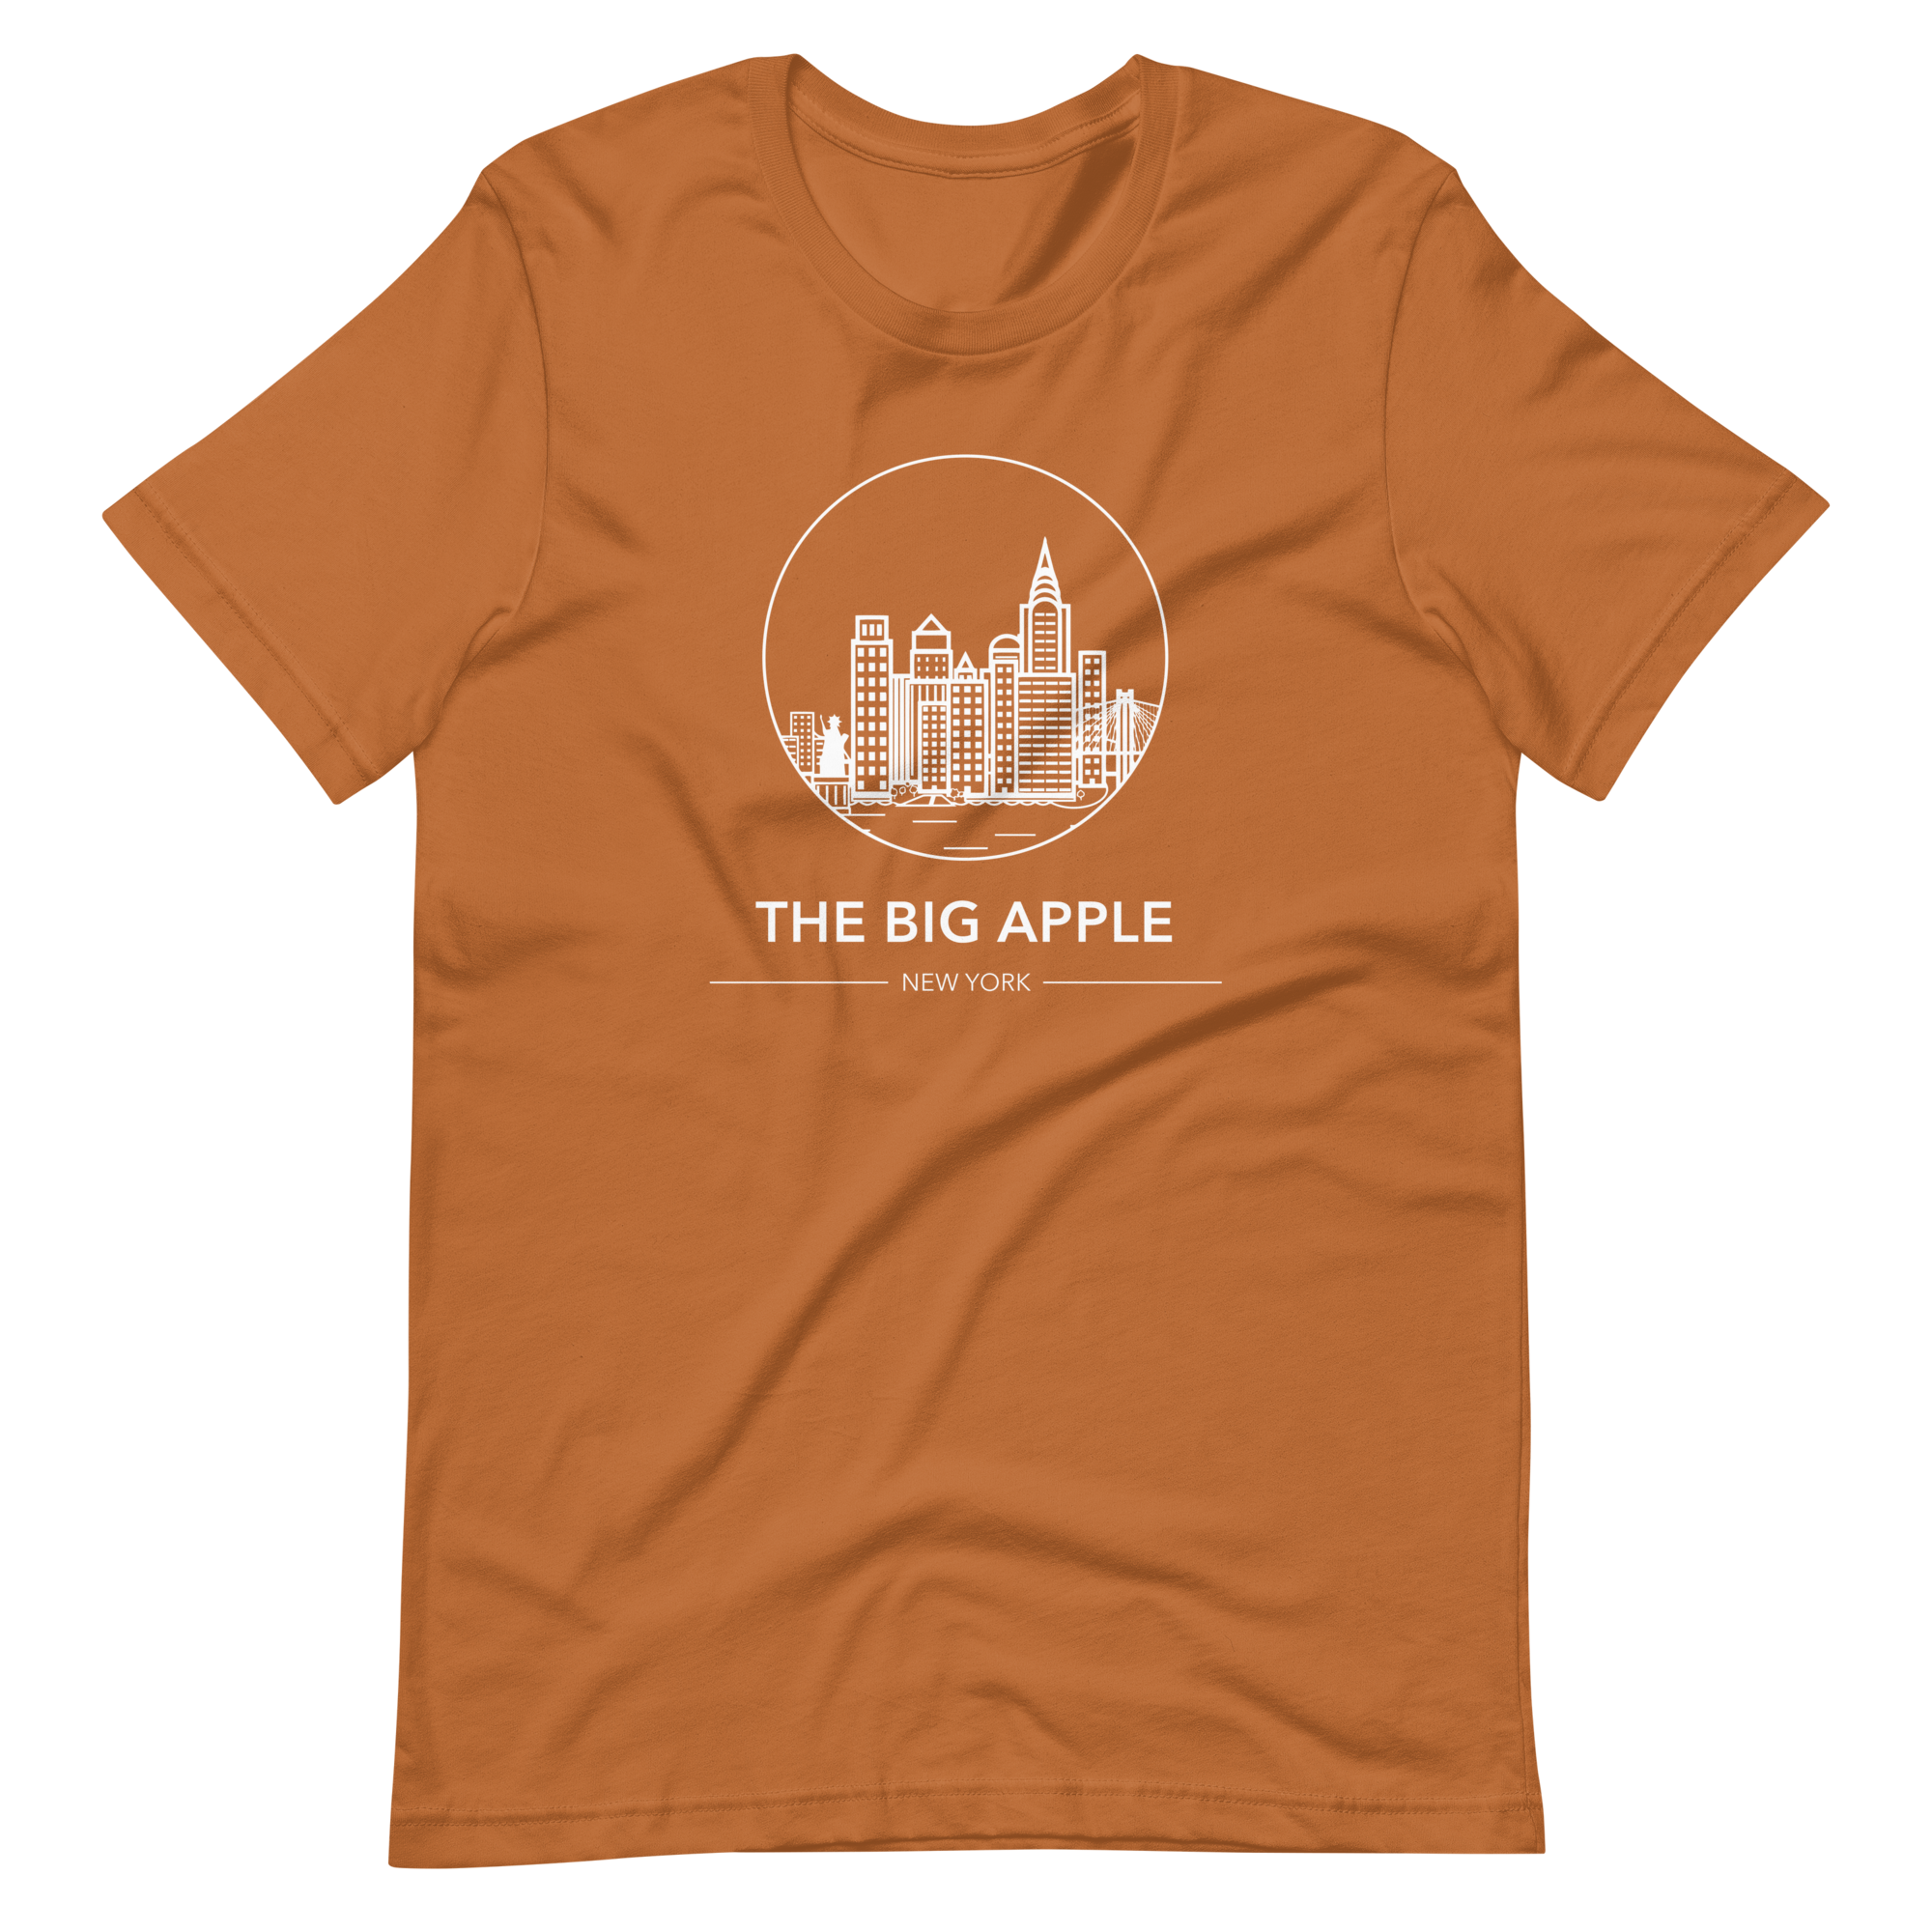 New York City T-Shirt - The Big Apple - New York City Tee